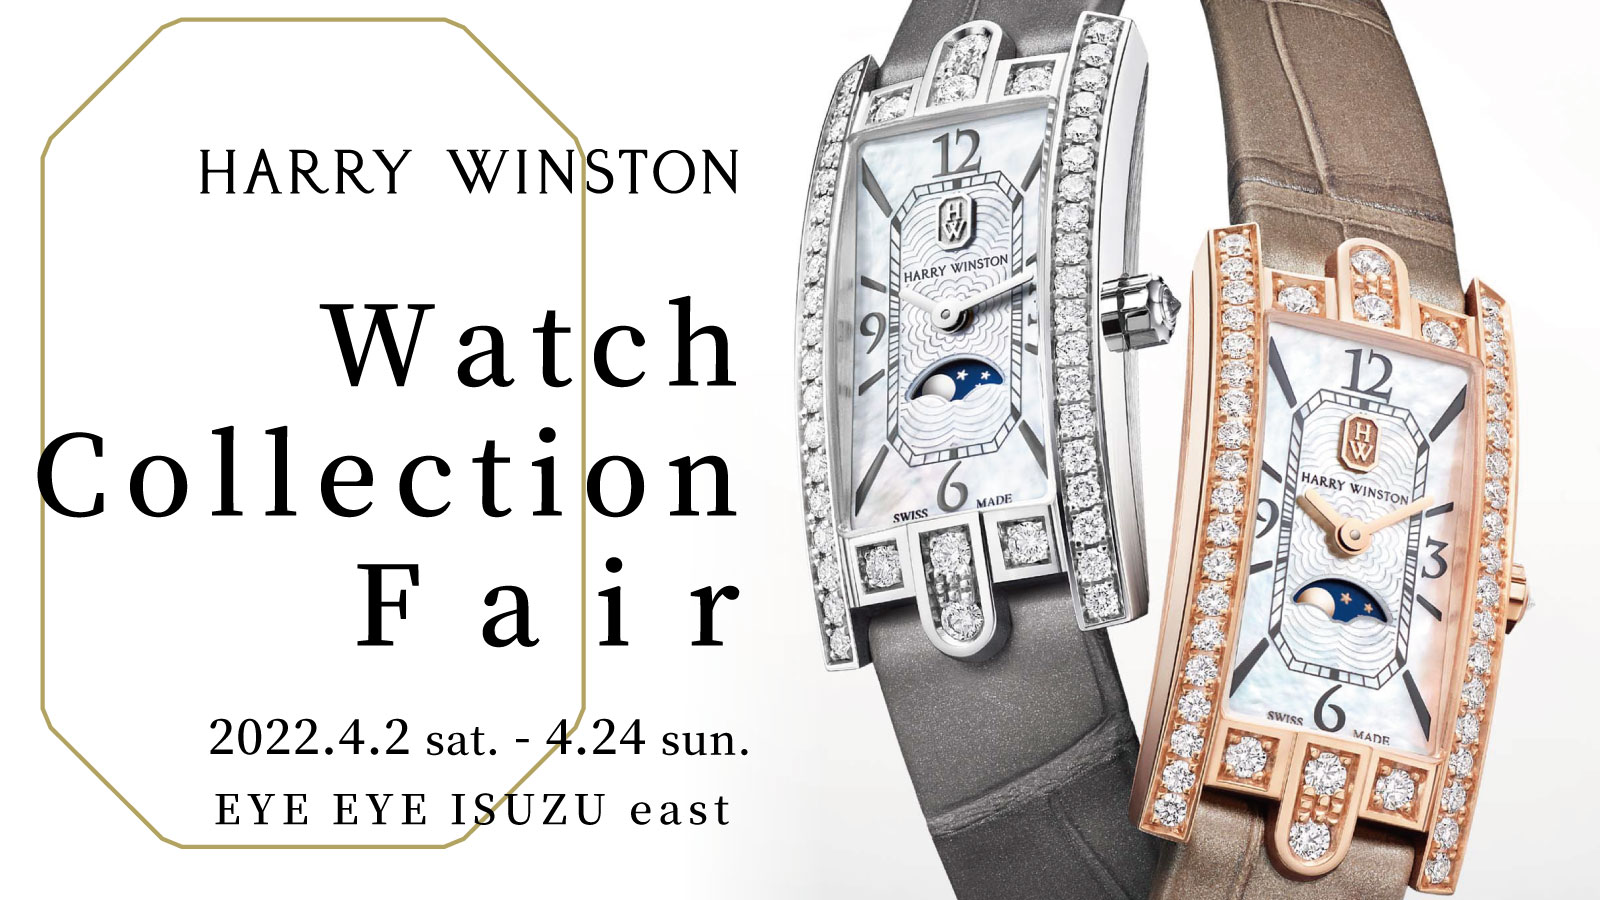 Harry Winston Watch Collection Fair